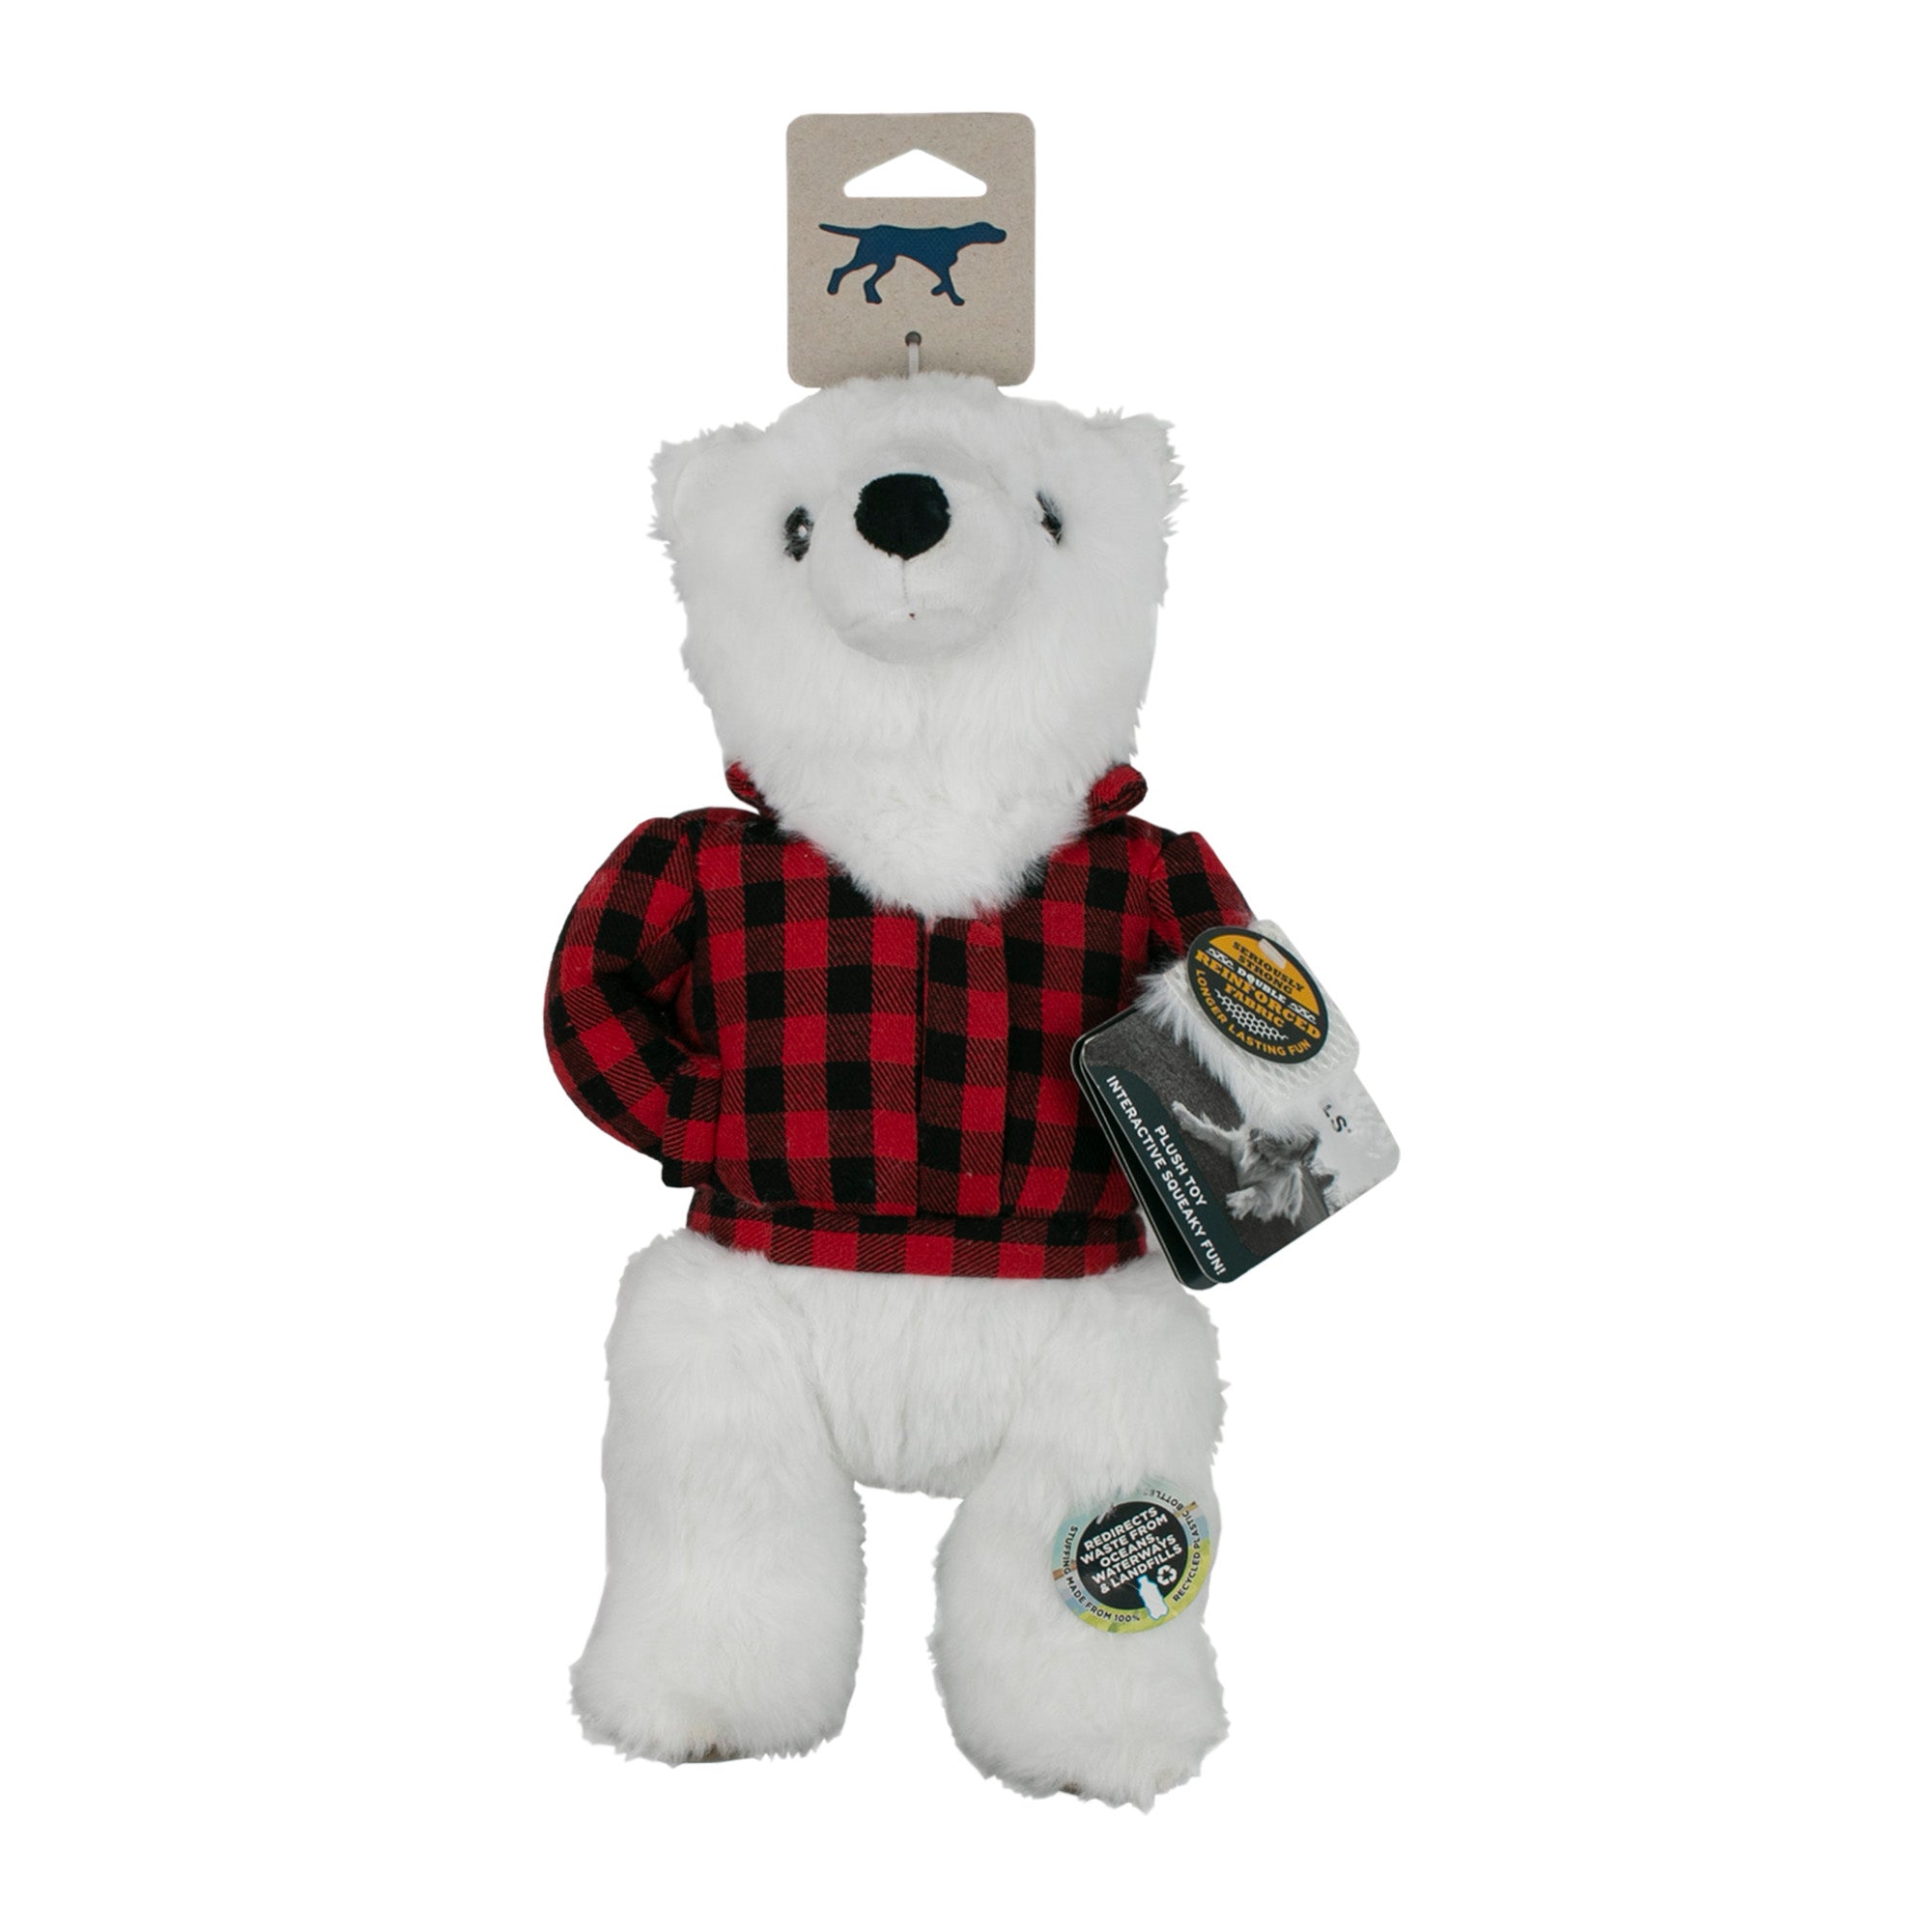 Squeaky Plush Dog Toy: Plaid Polar Bear